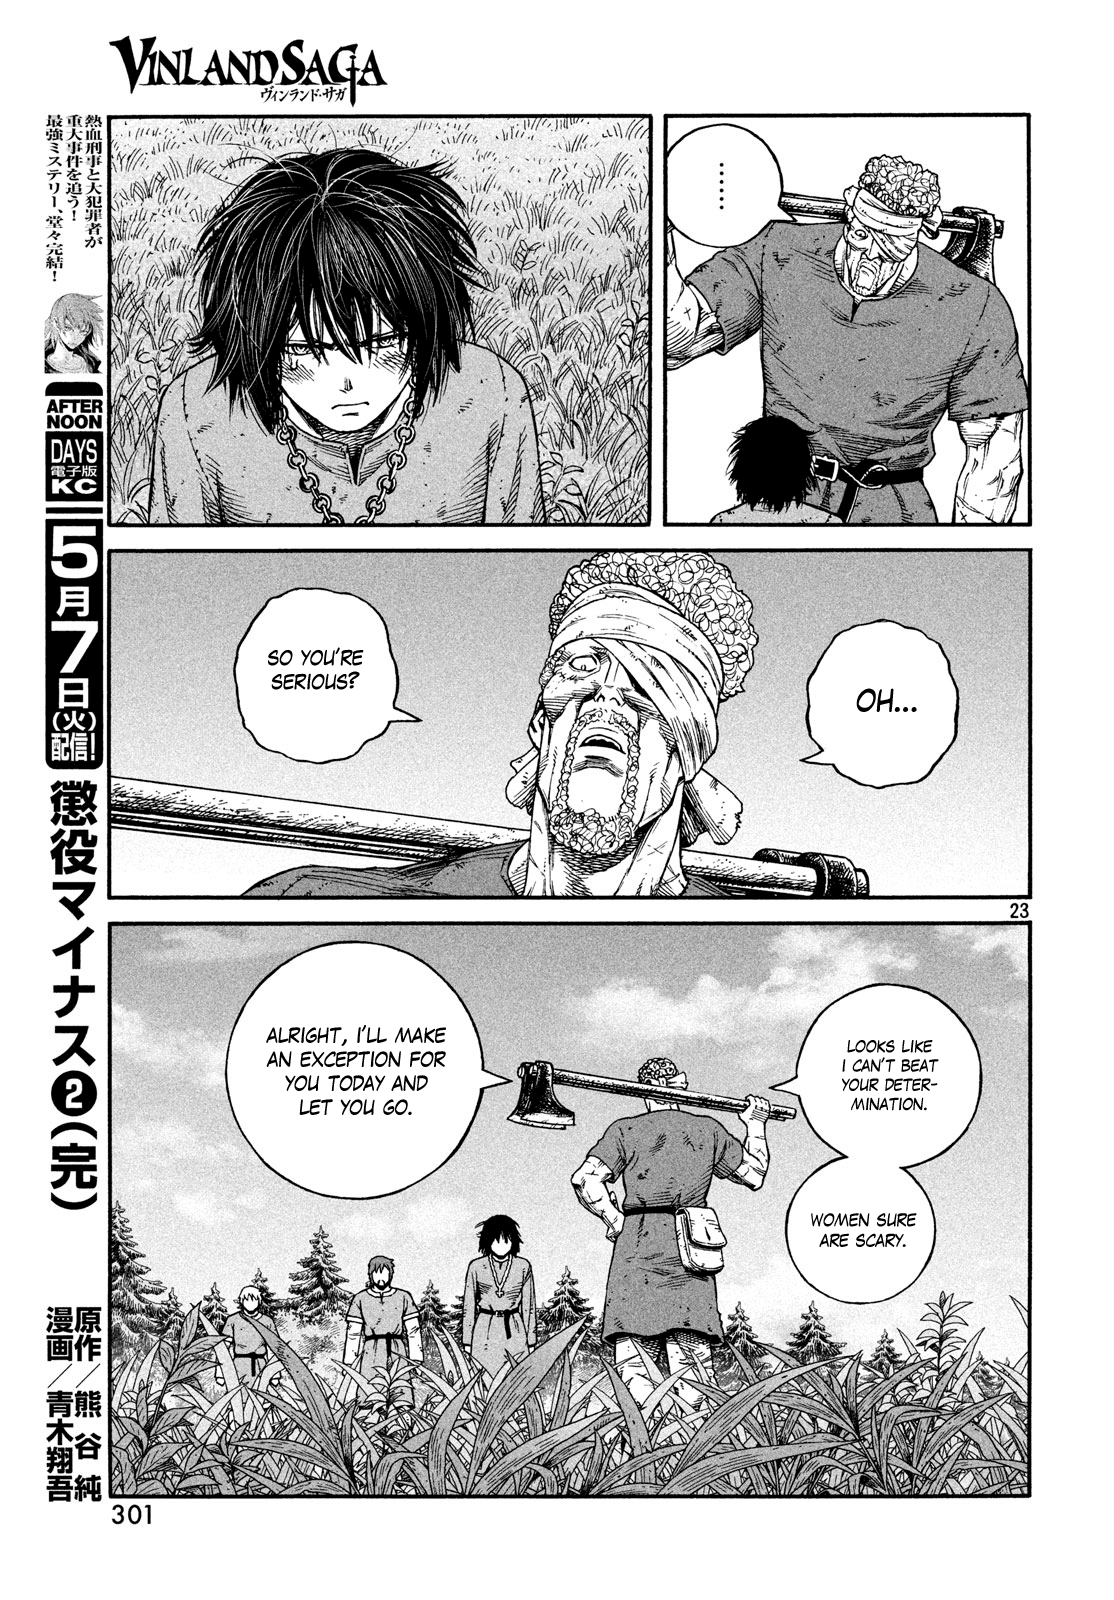 Vinland Saga Manga Manga Chapter - 160 - image 22